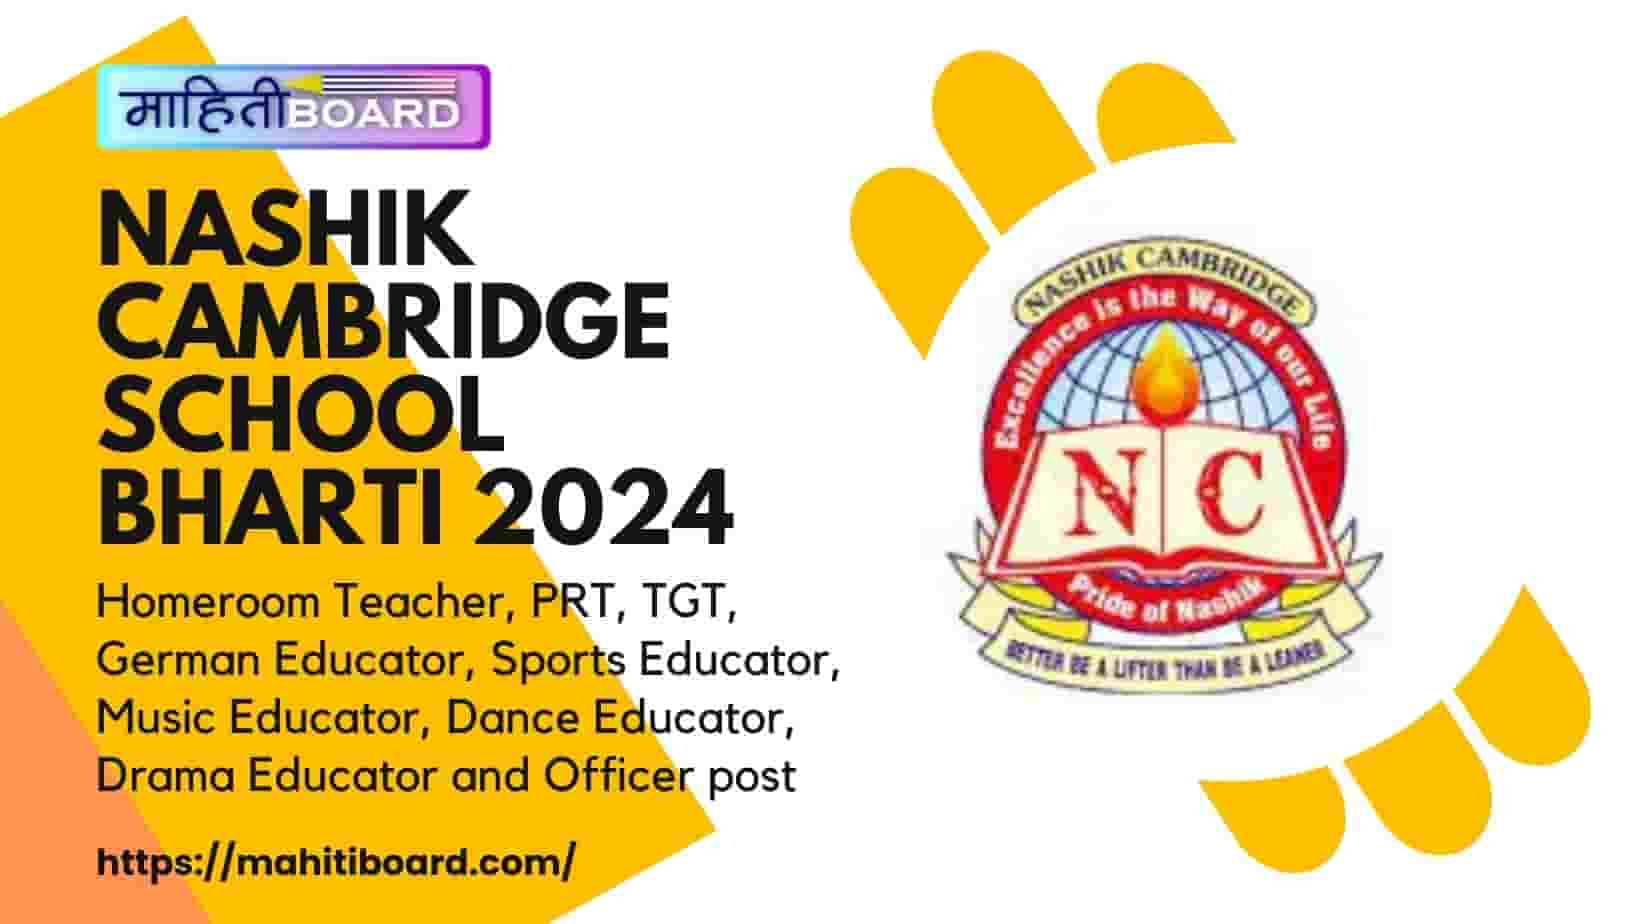 Nashik Cambridge School Bharti 2024